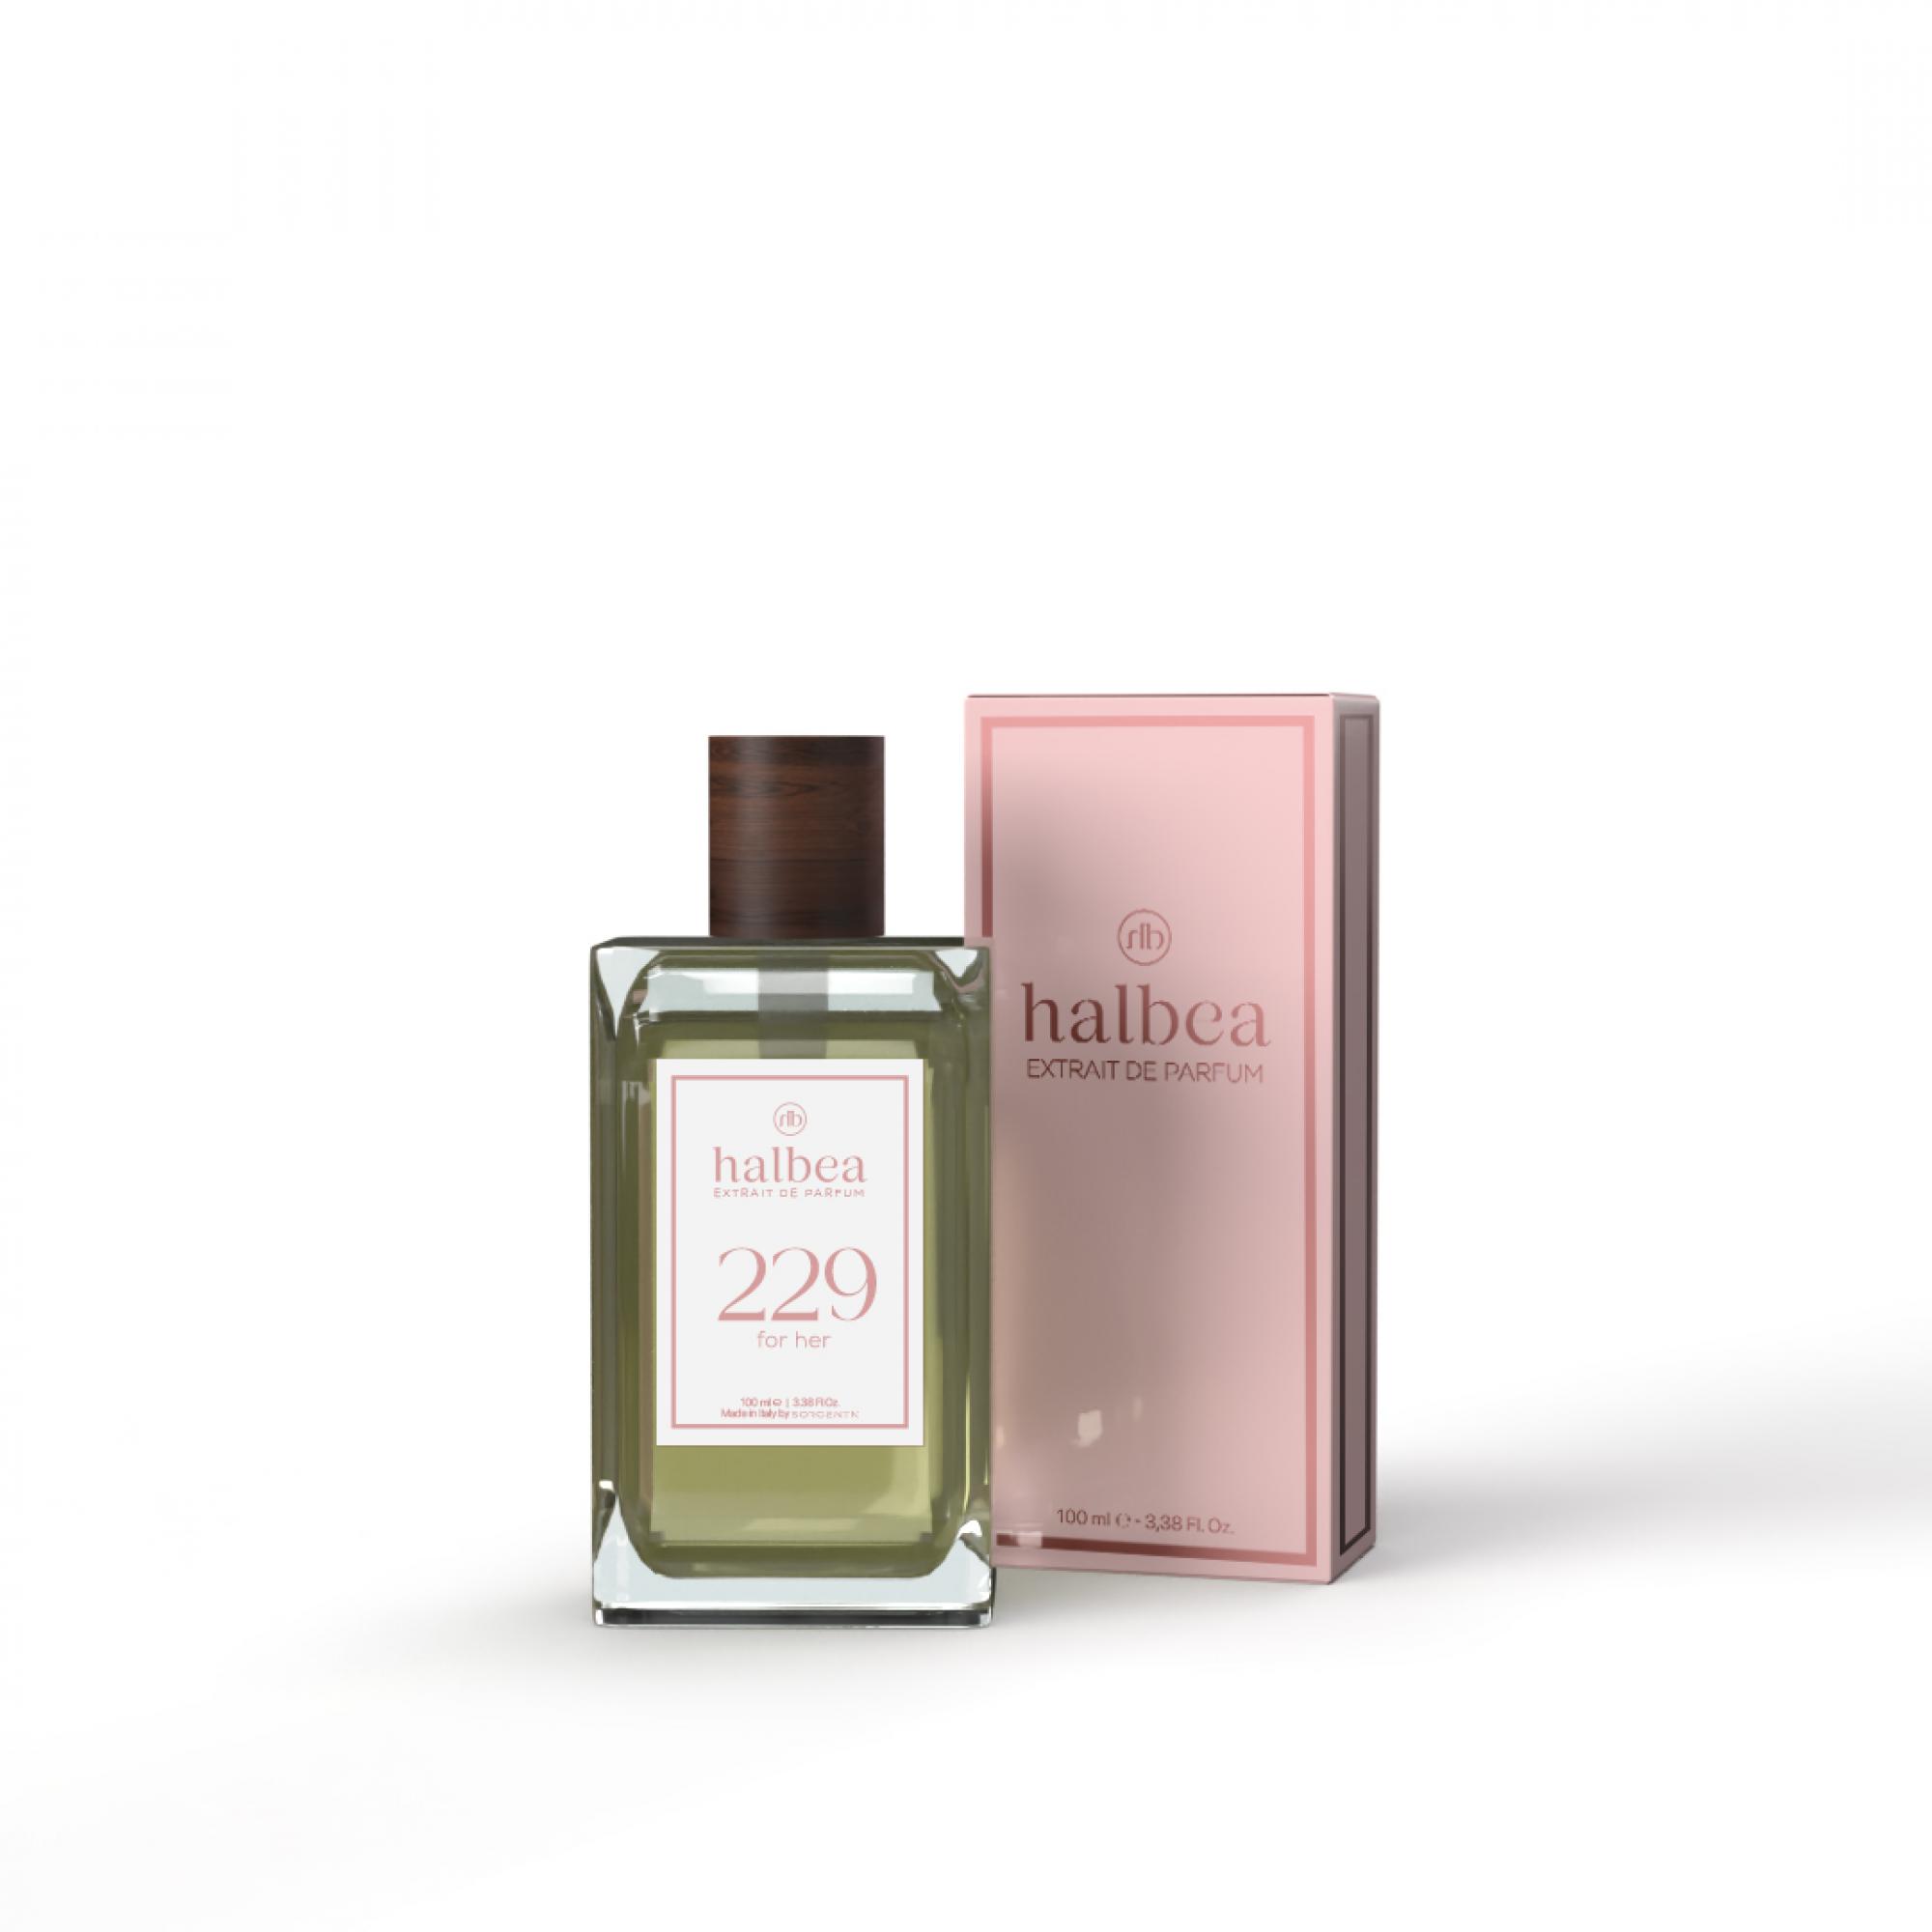 Halbea Parfum Nr. 229 insp. by My Way Giorgio Armani 100ml